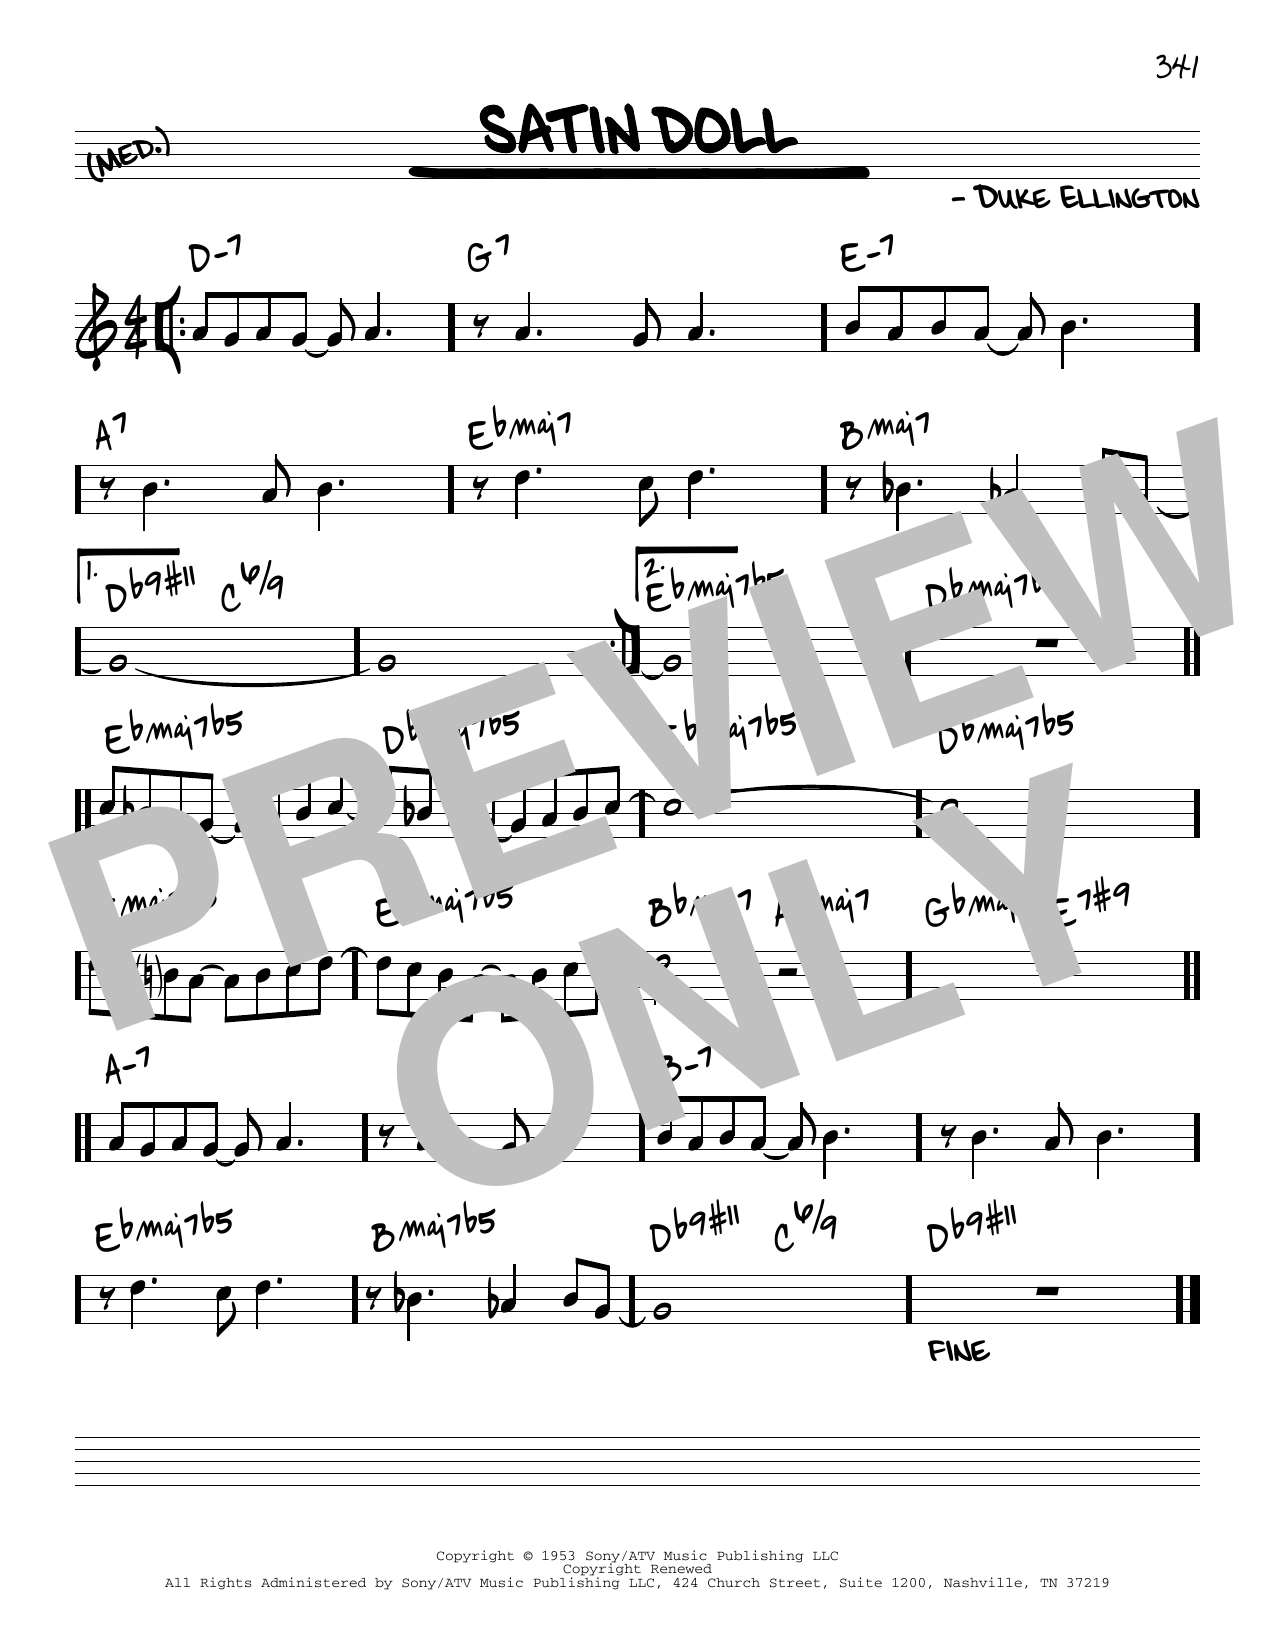 Download Duke Ellington Satin Doll [Reharmonized version] (arr. Sheet Music